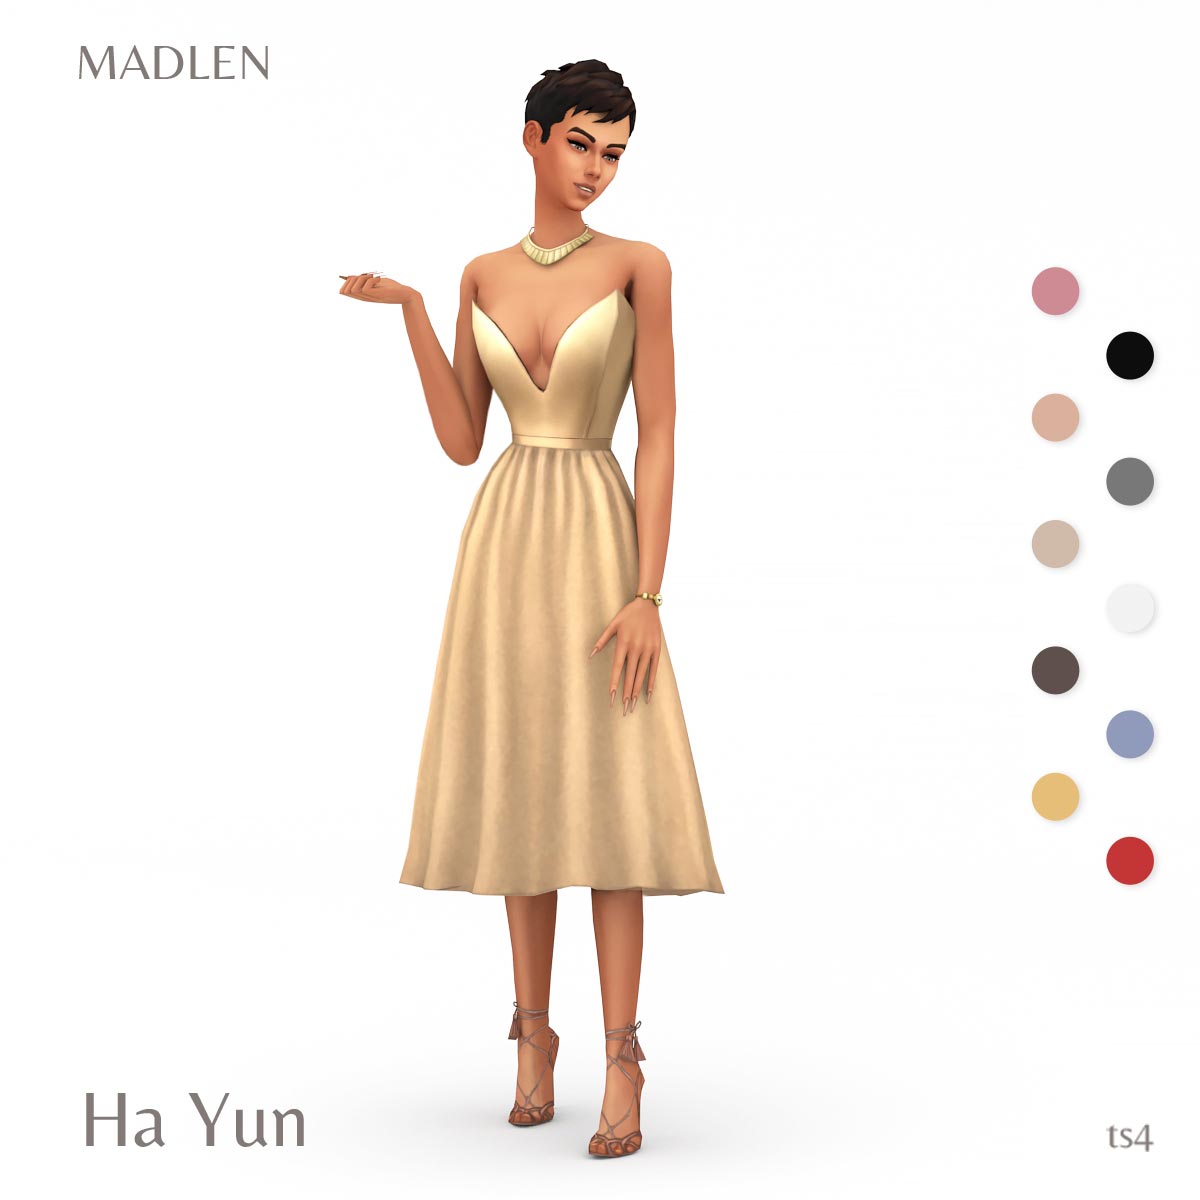 Madlen The Sims 4 Ha Yun Dress CC